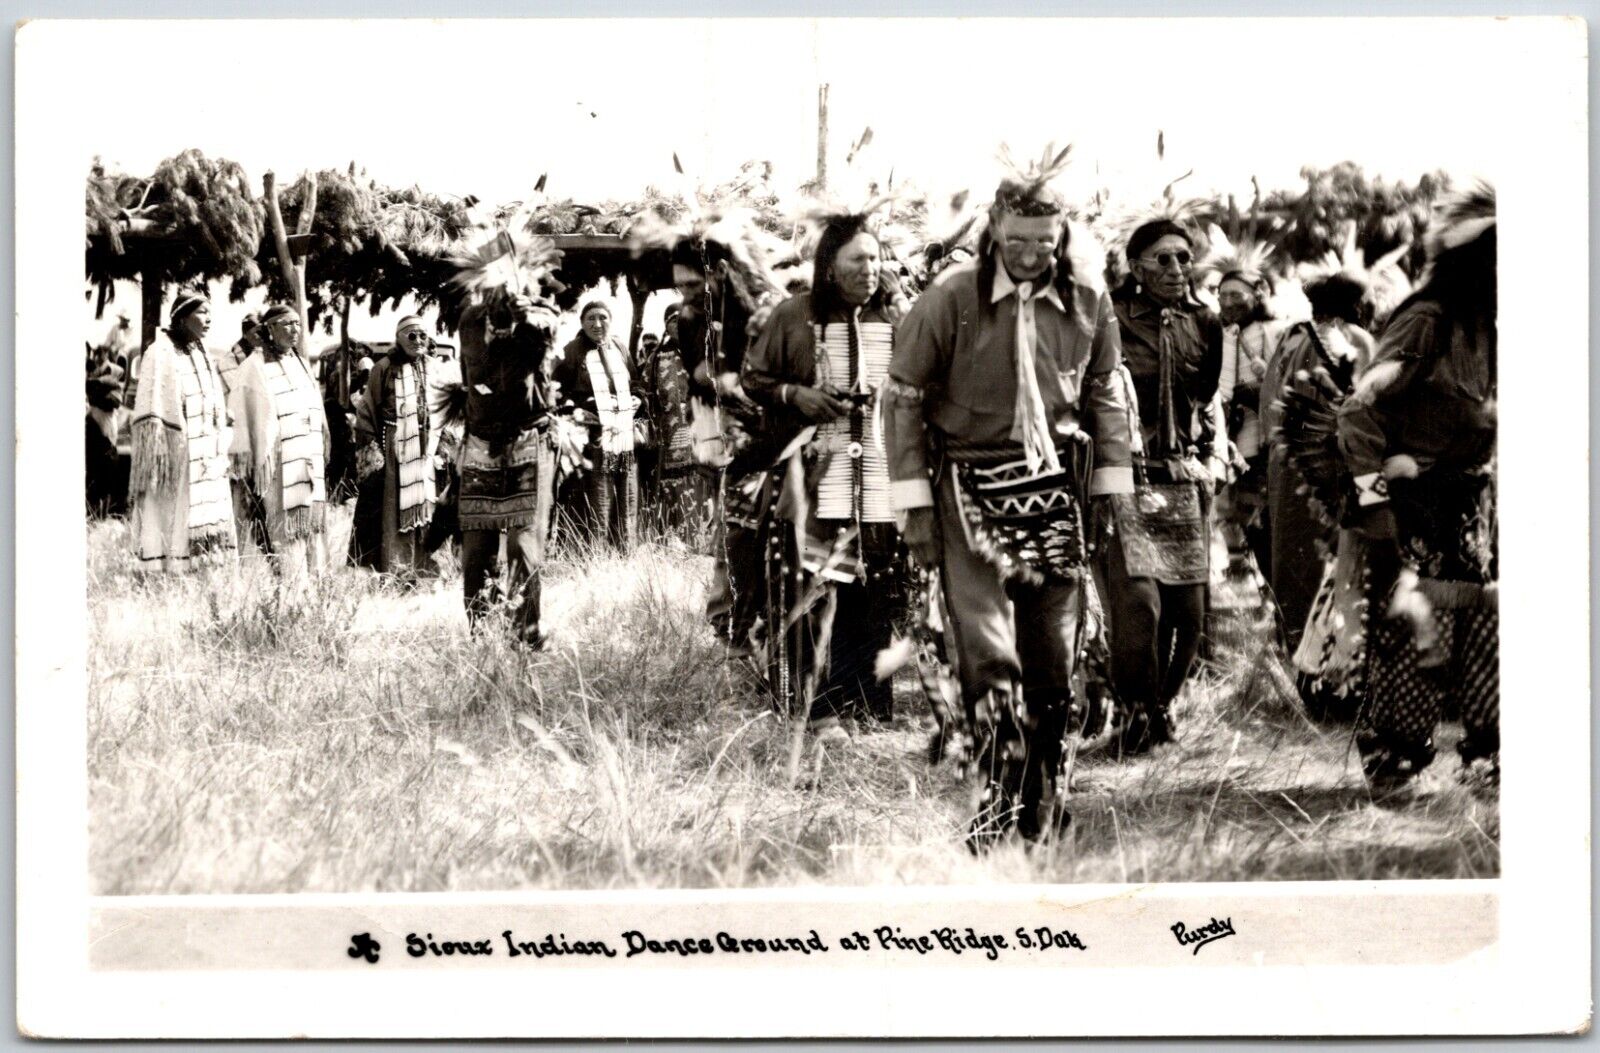 Sioux Indian Dance Ground at Pine Ridge, South Dakota RPPC - Postcard